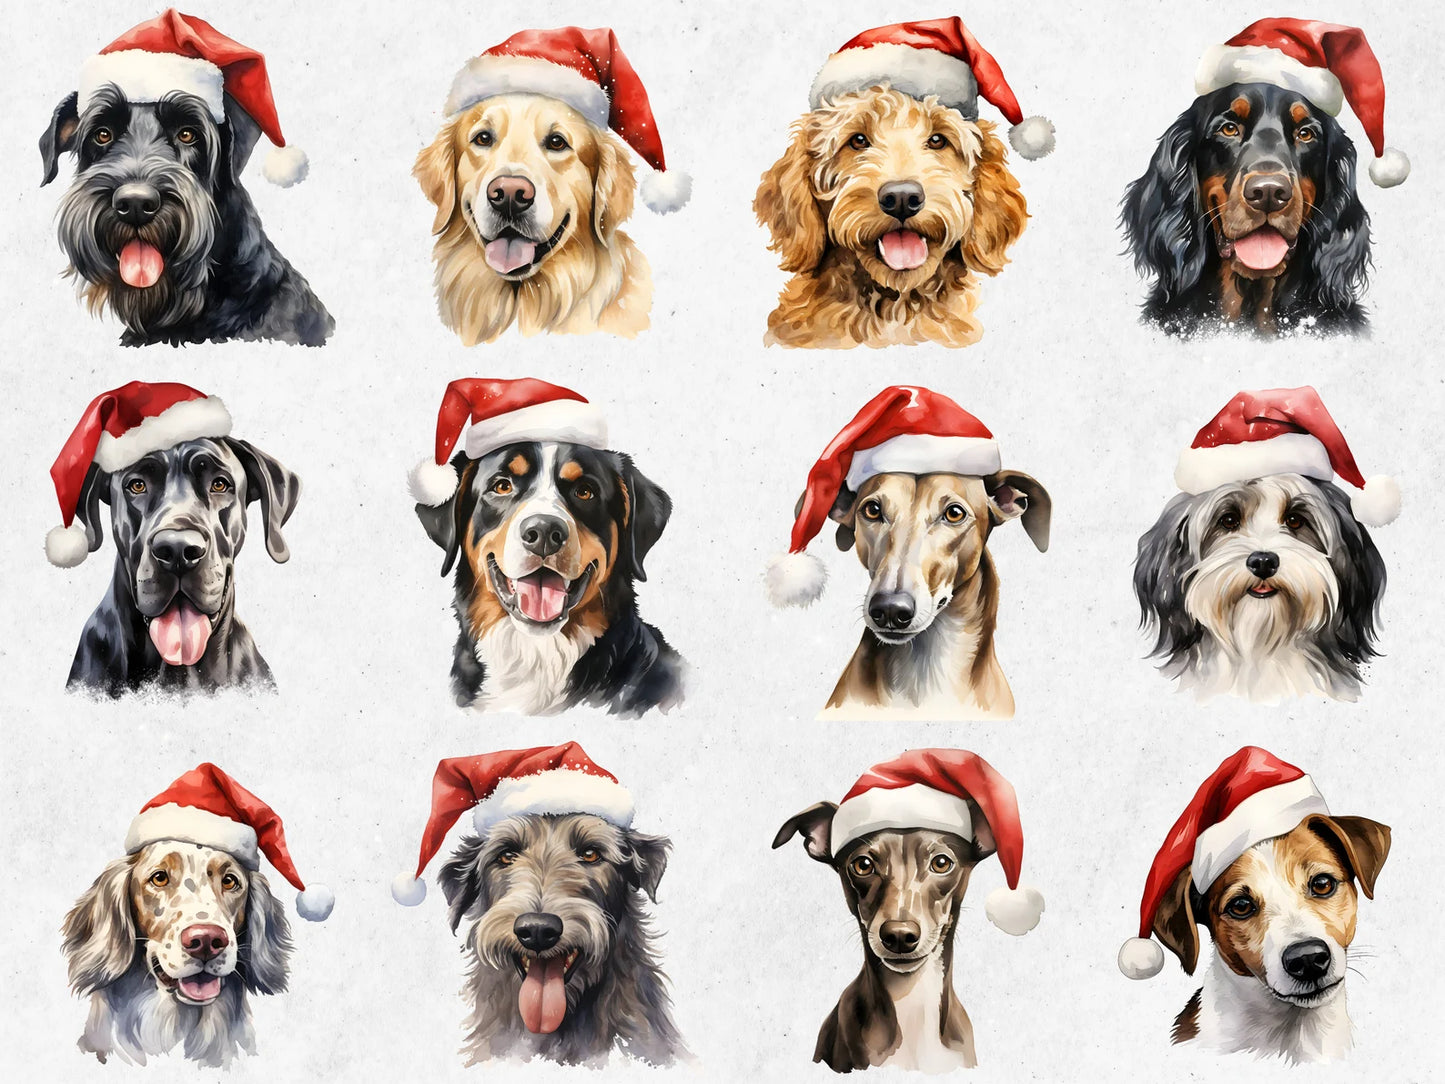 Christmas Dogs 100 Dog Breeds PNG+JPG Clipart Bundle